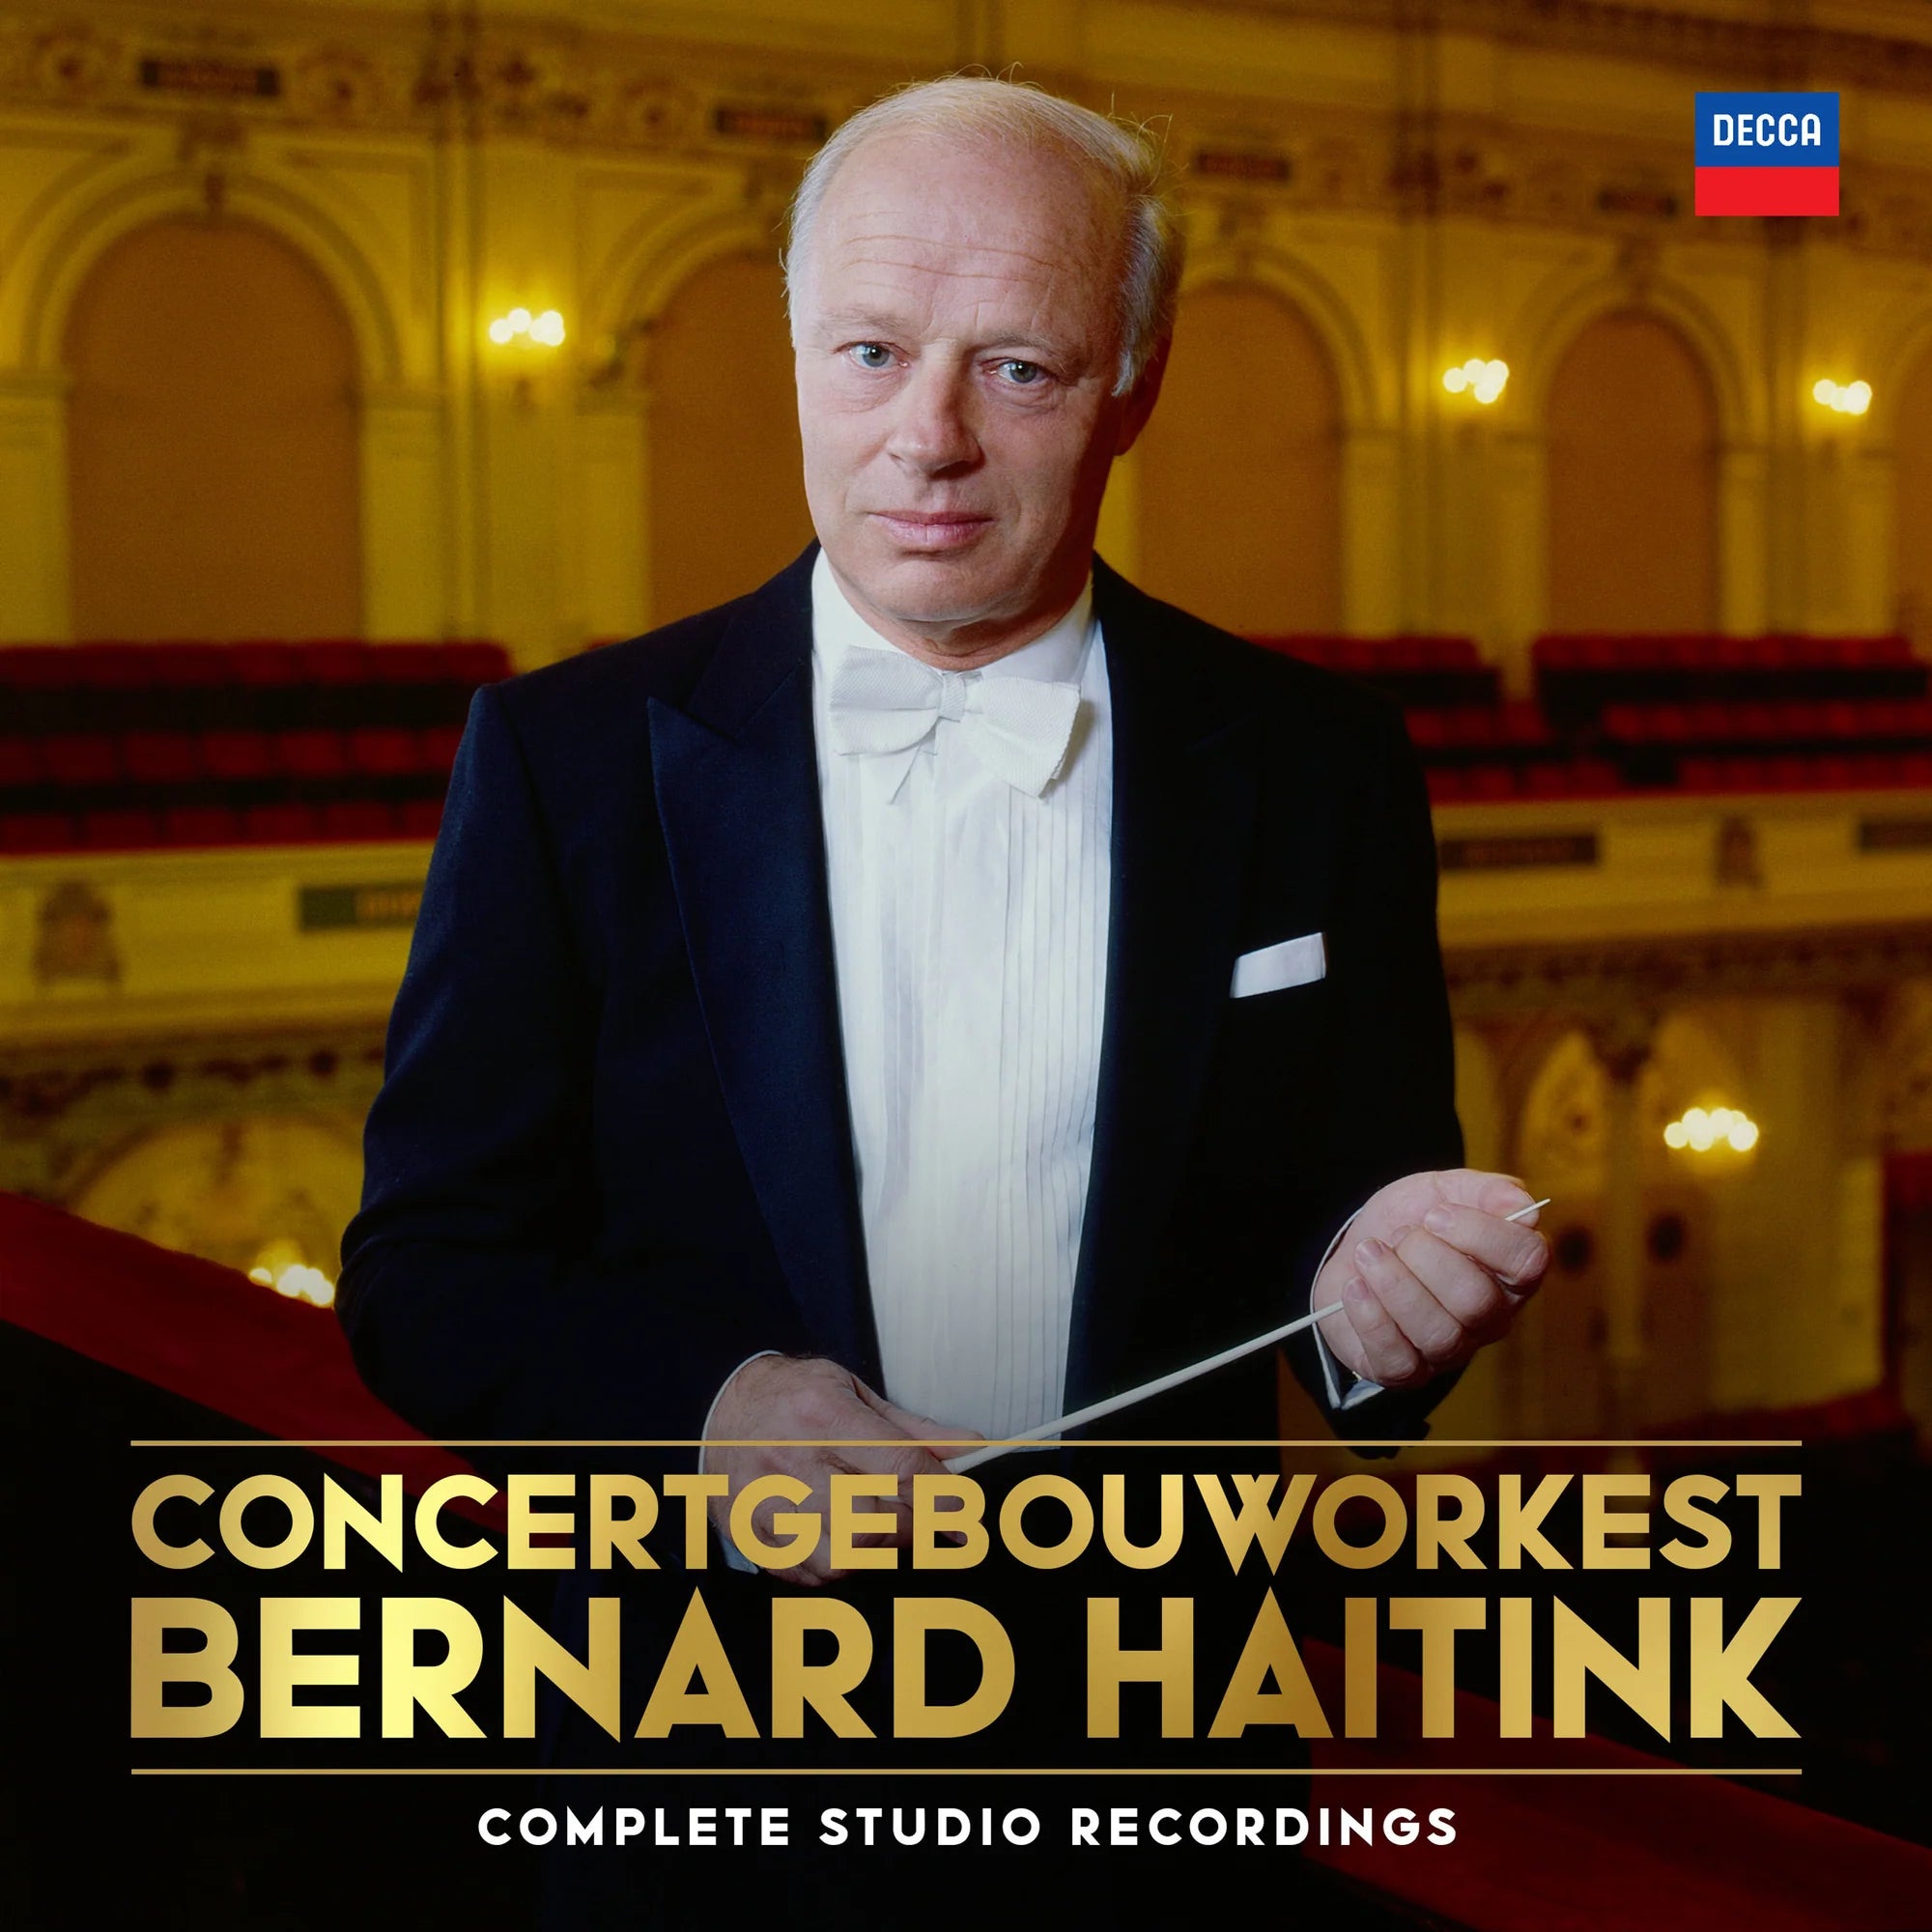 Royal Concertgebouw Orchestra, Bernard Haitink - Concertgebouworkest — Complete Studio Recordings